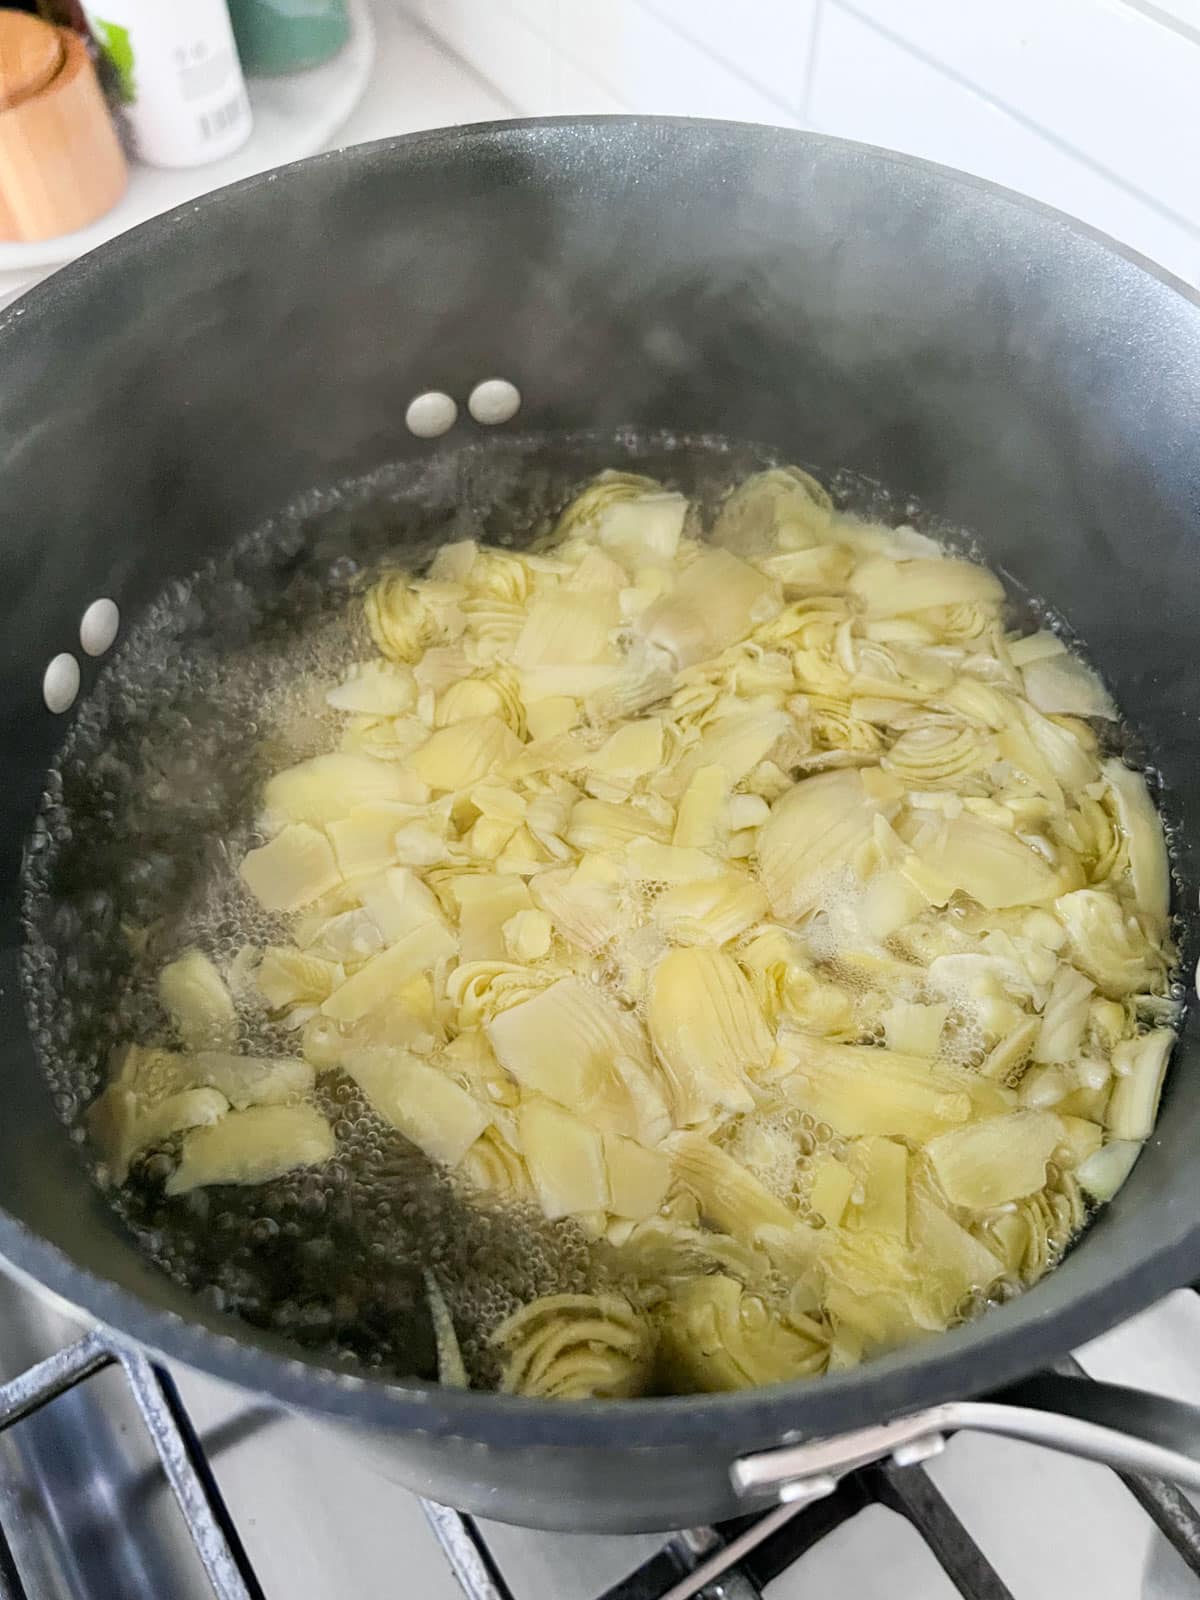 Artichoke hearts boiling in a large pan.